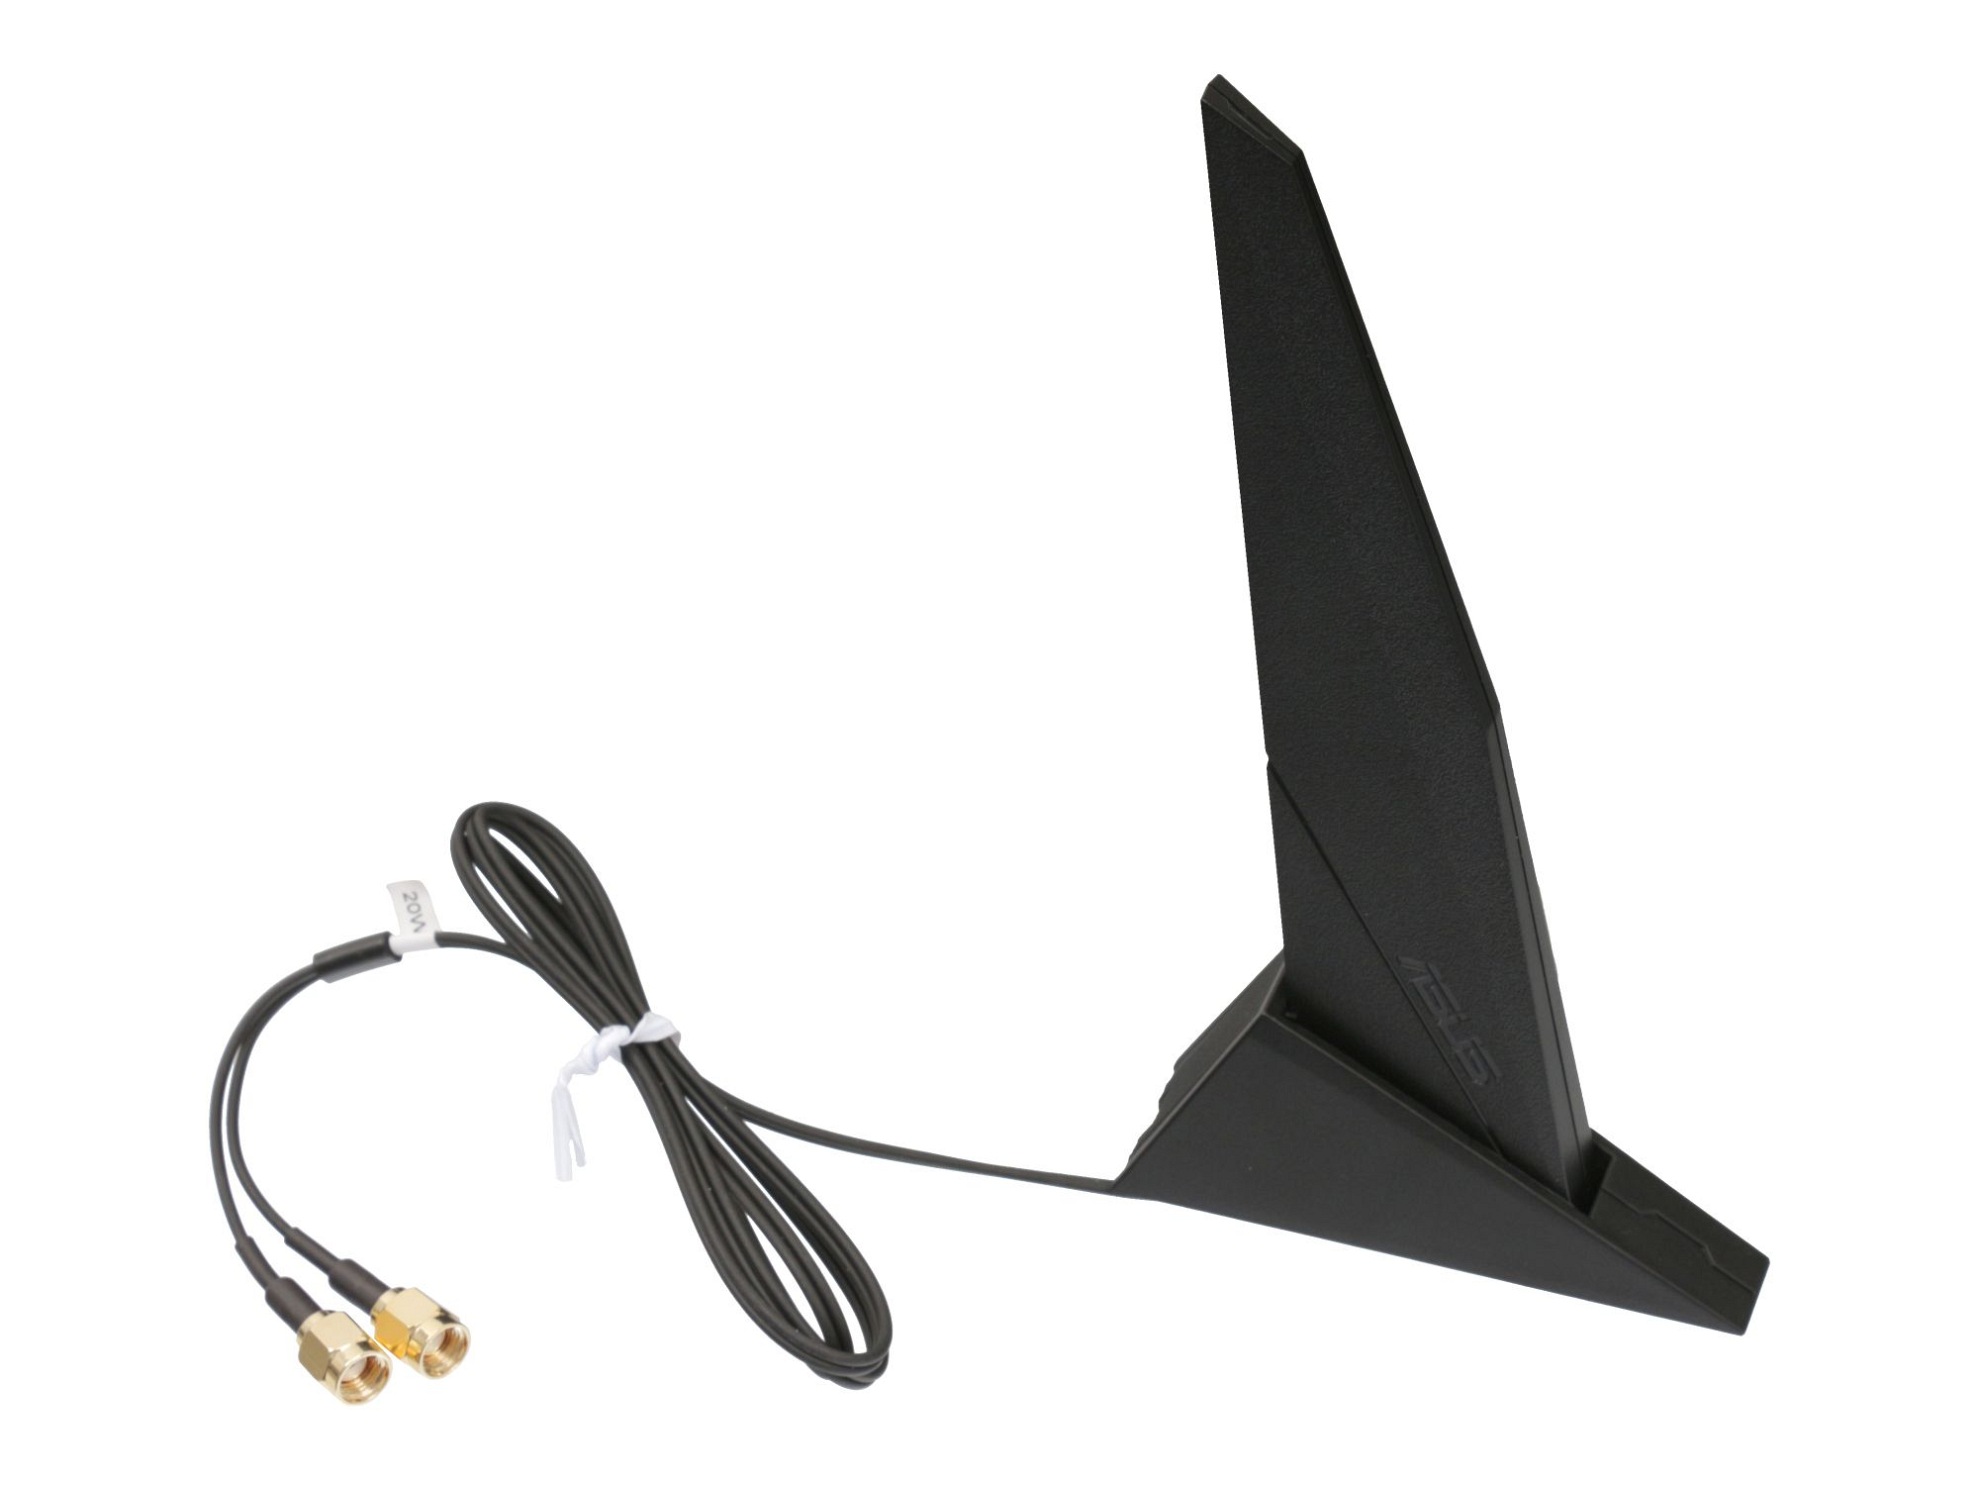 Externe Asus RP-SMA DIPOLE Antenne für Asus TUF GAMING B550M-PLUS